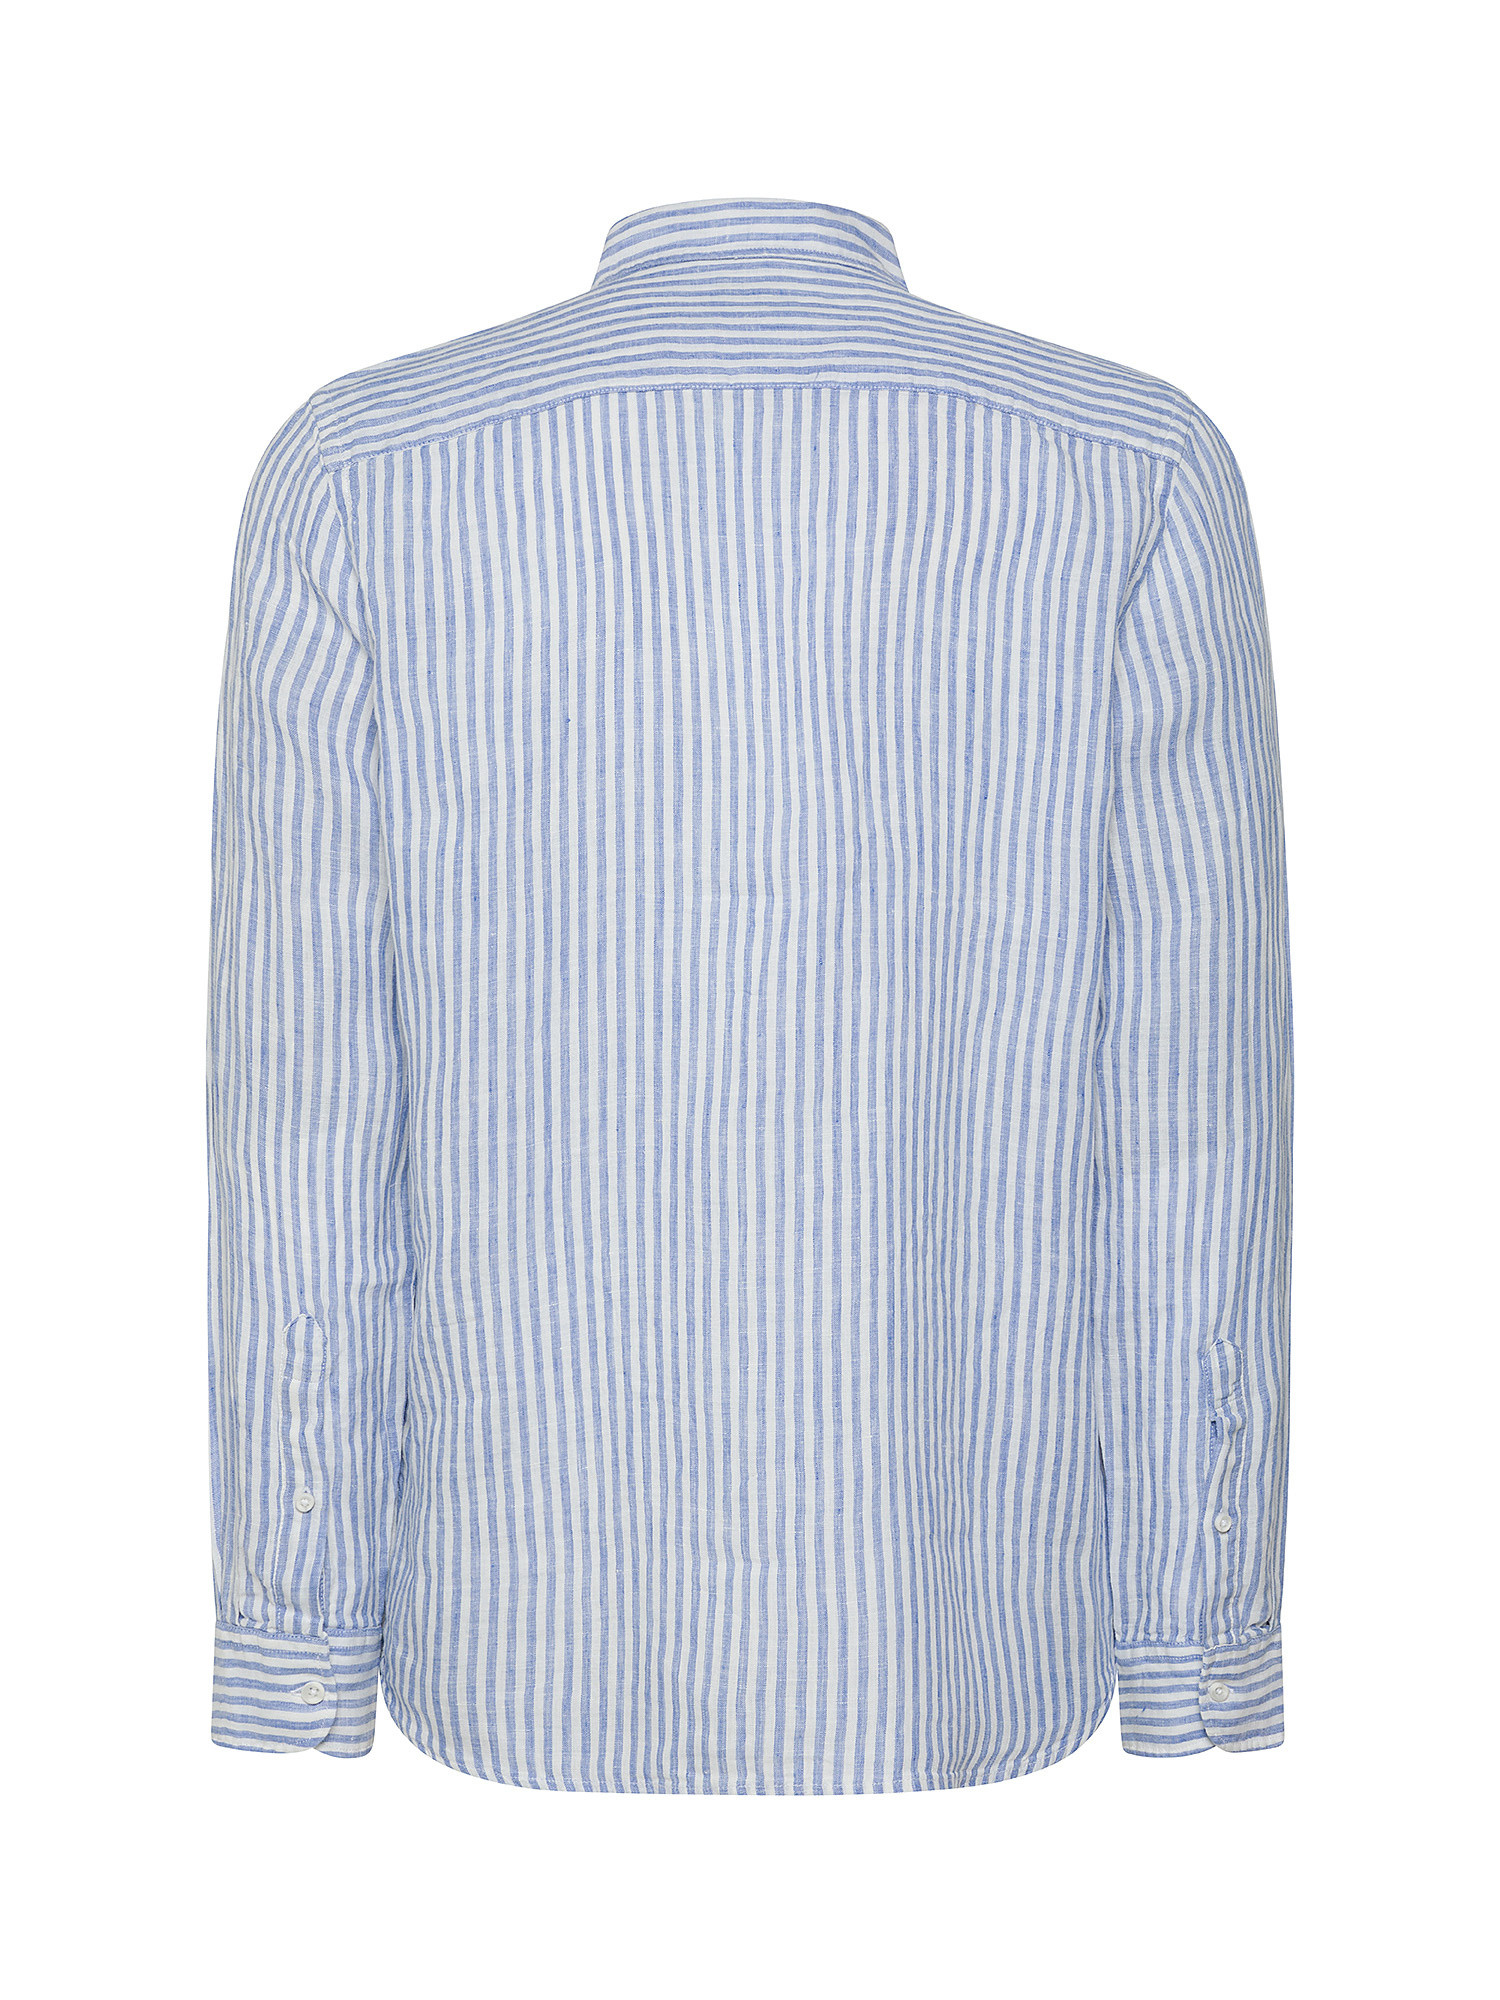 JCT - Camicia a righe in puro lino, Azzurro, large image number 1